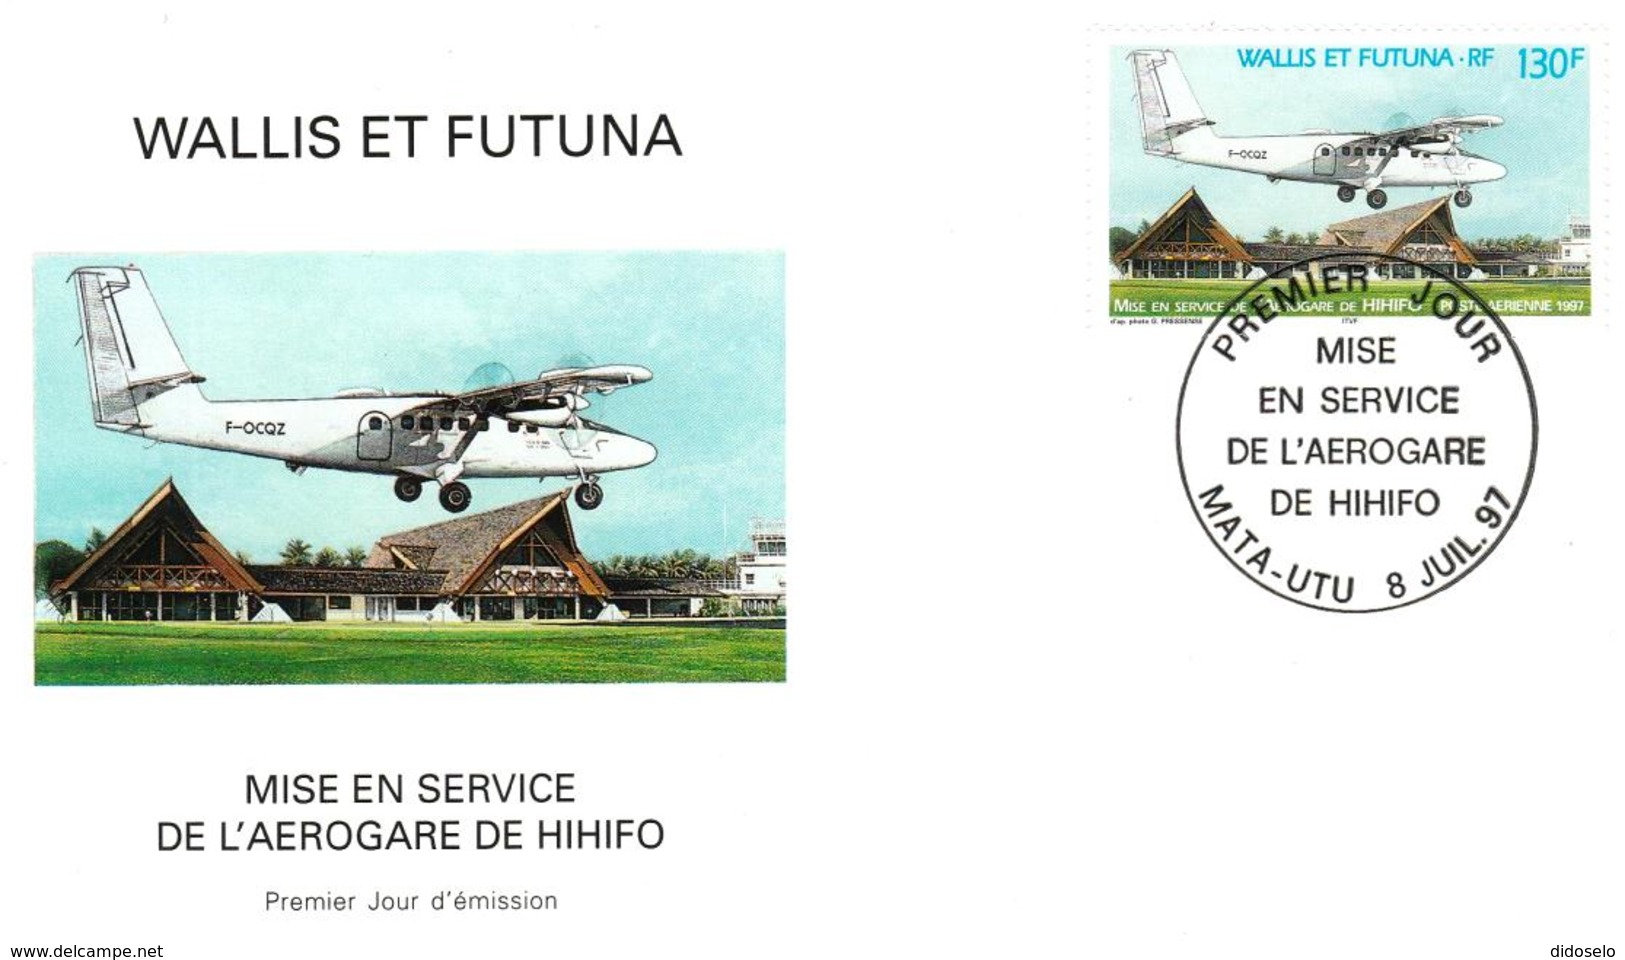 Wallis And Futuna Aero Stamp On FDC - Aeroplane - Brieven En Documenten